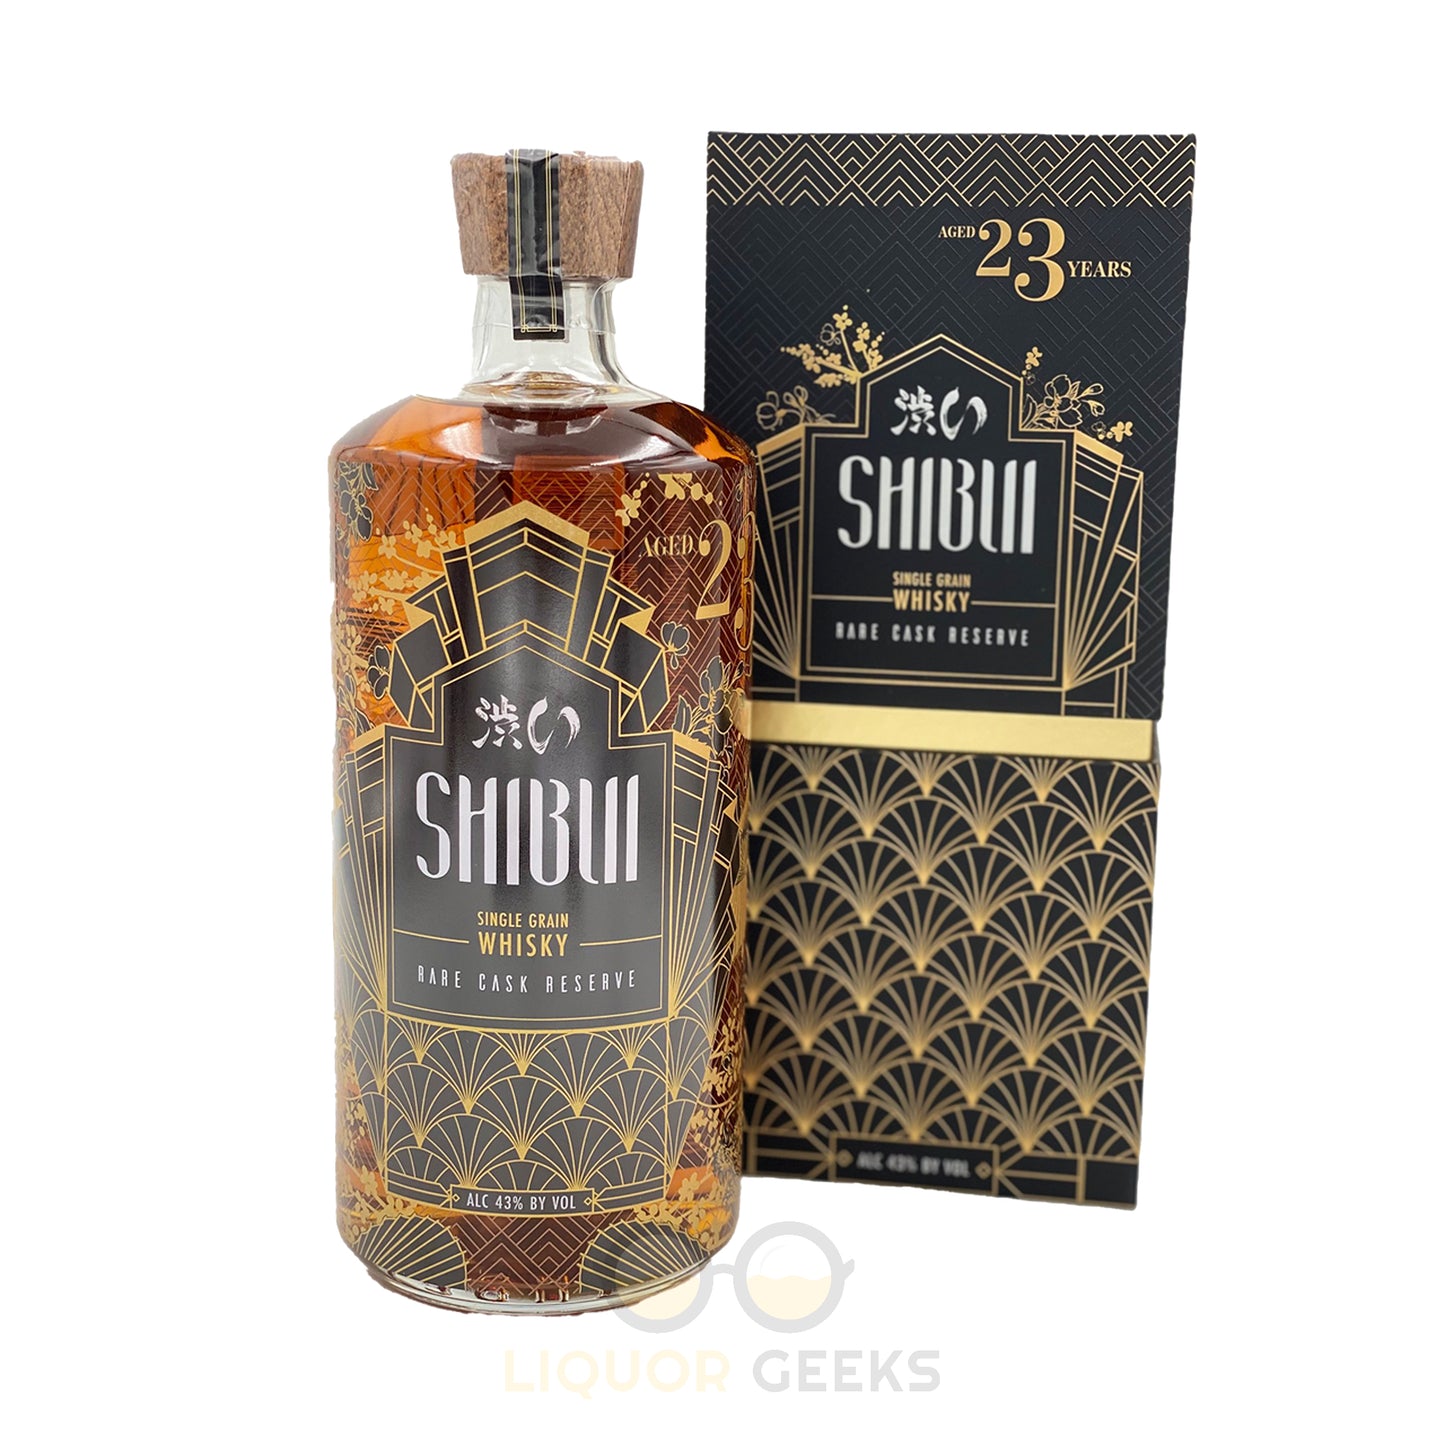 Shibui Single Grain Whisky Rare Cask Reserve 23 Year - Liquor Geeks